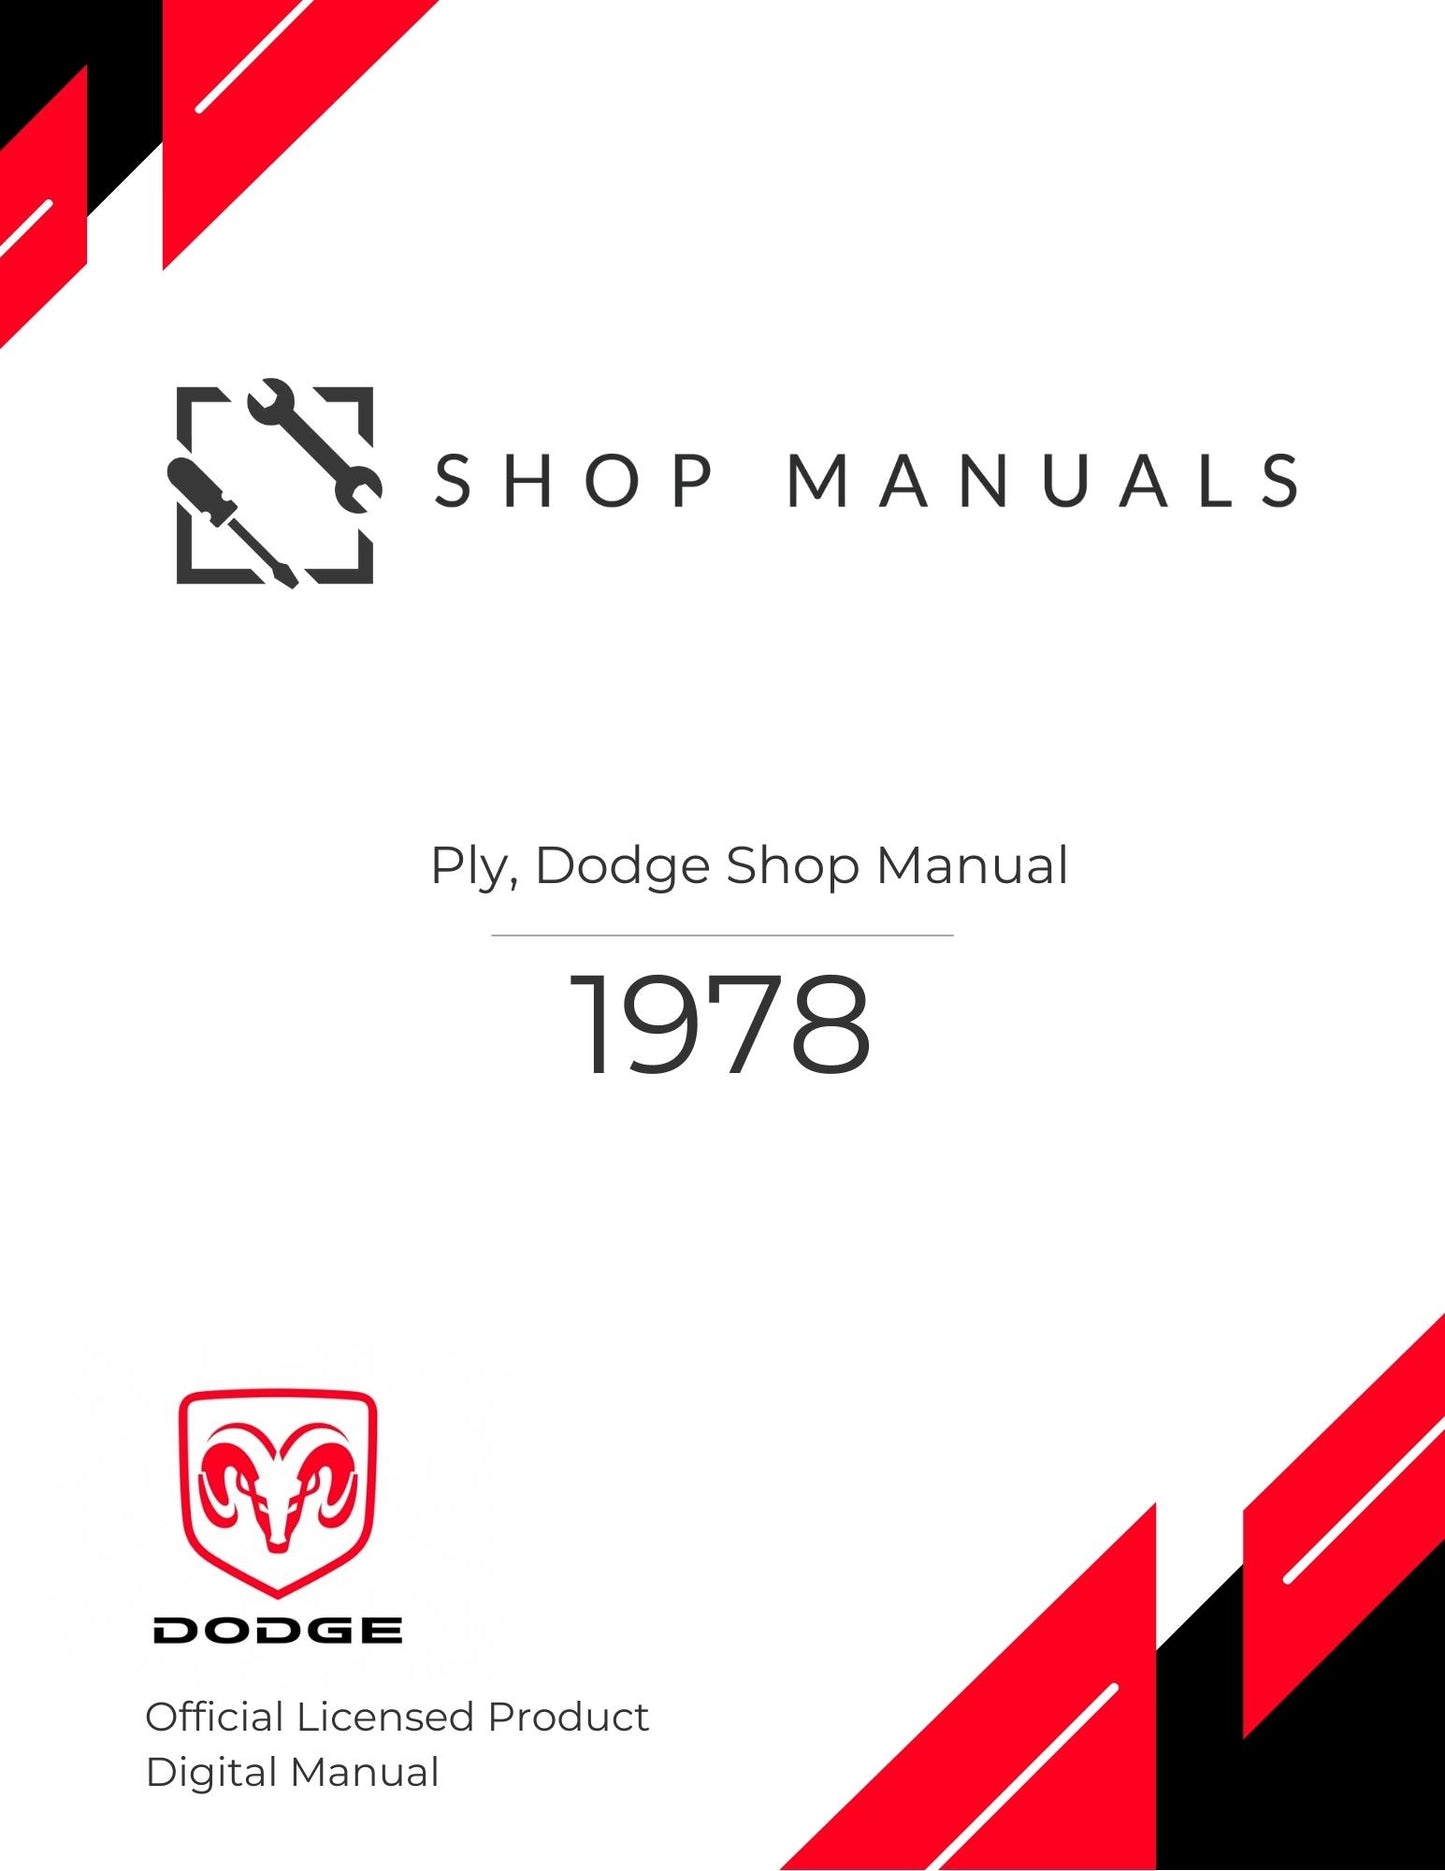 1978 Ply, Dodge Shop Manual